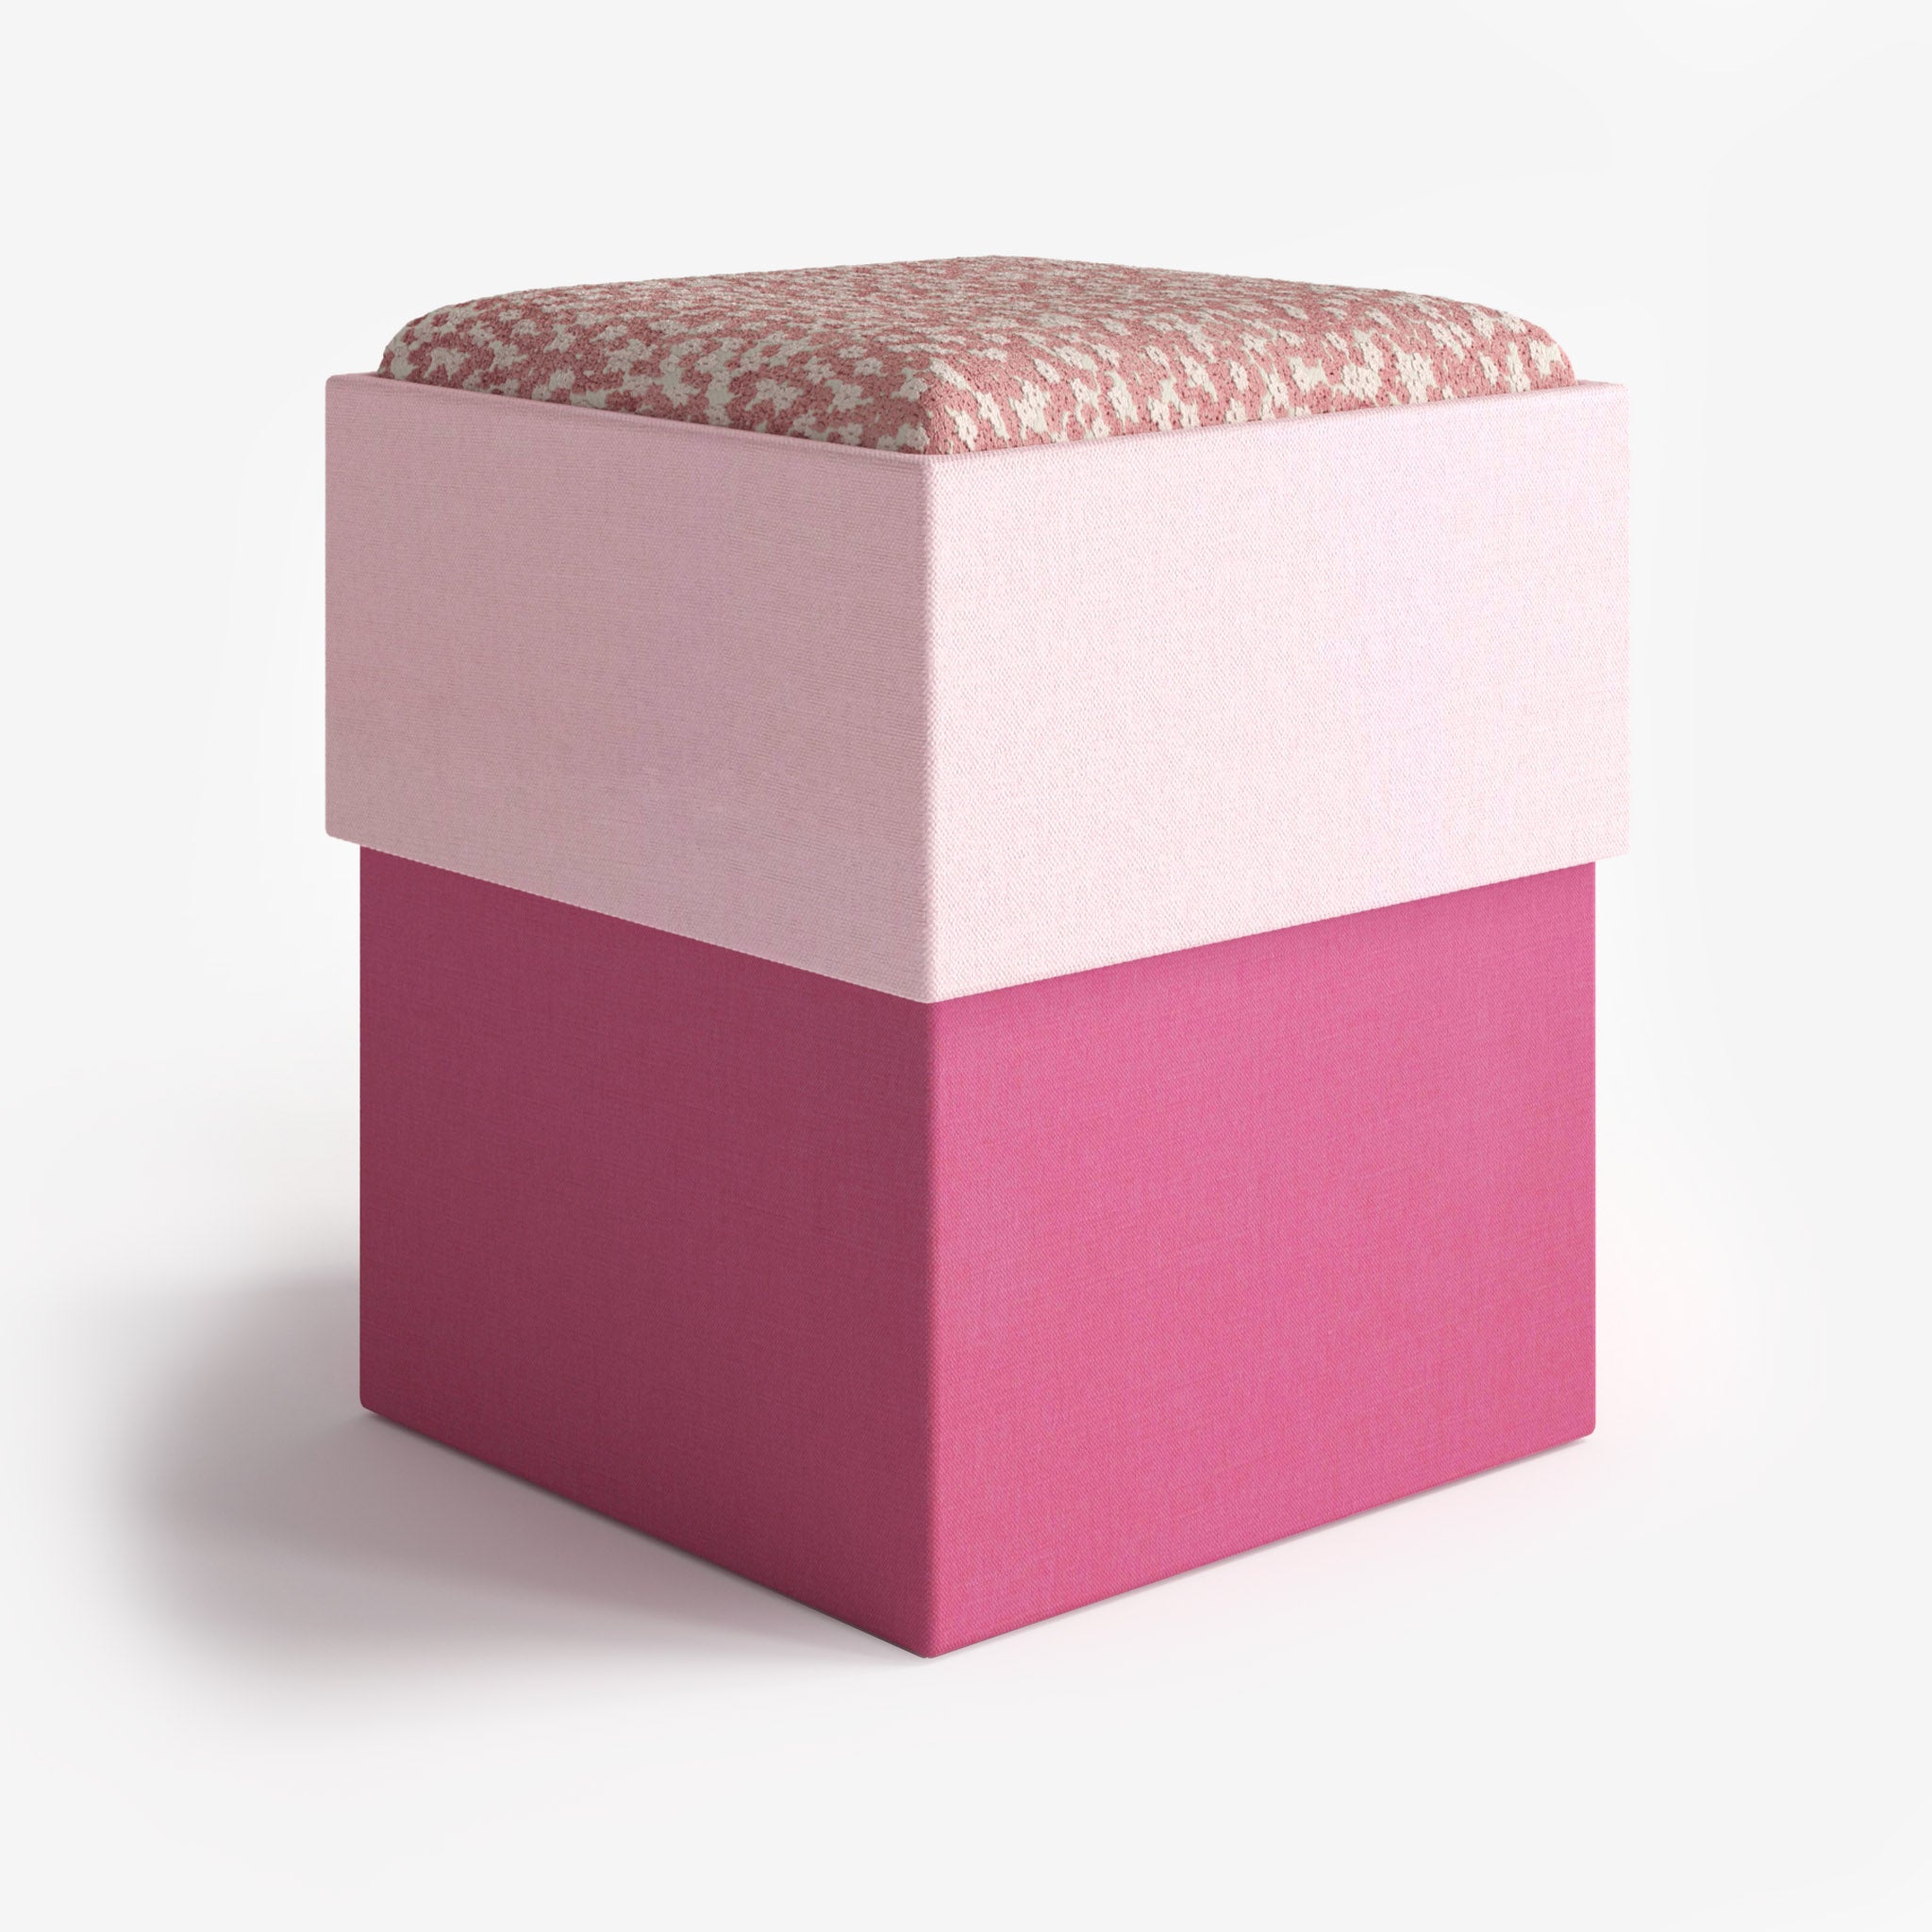 Luxury furniture, Barbie Inspired Stool, Pink, Contemporary Design, Modern Design, Upholstery, Bedroom